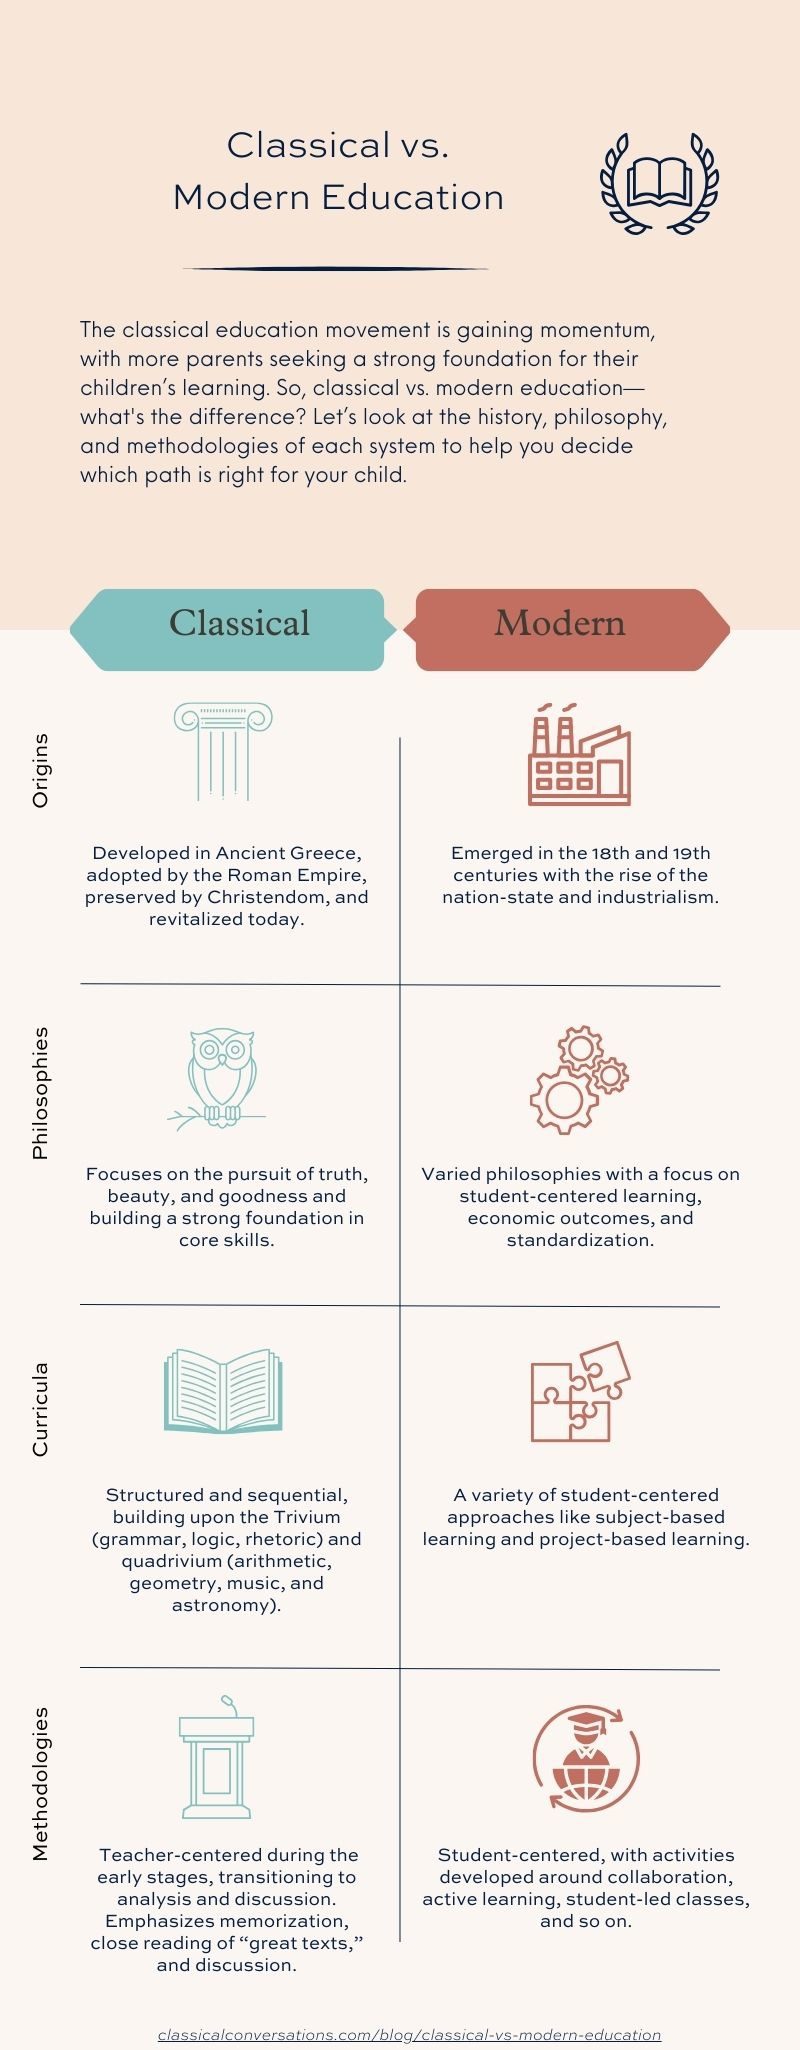 Classical vs modern education infographic: comparison chart.